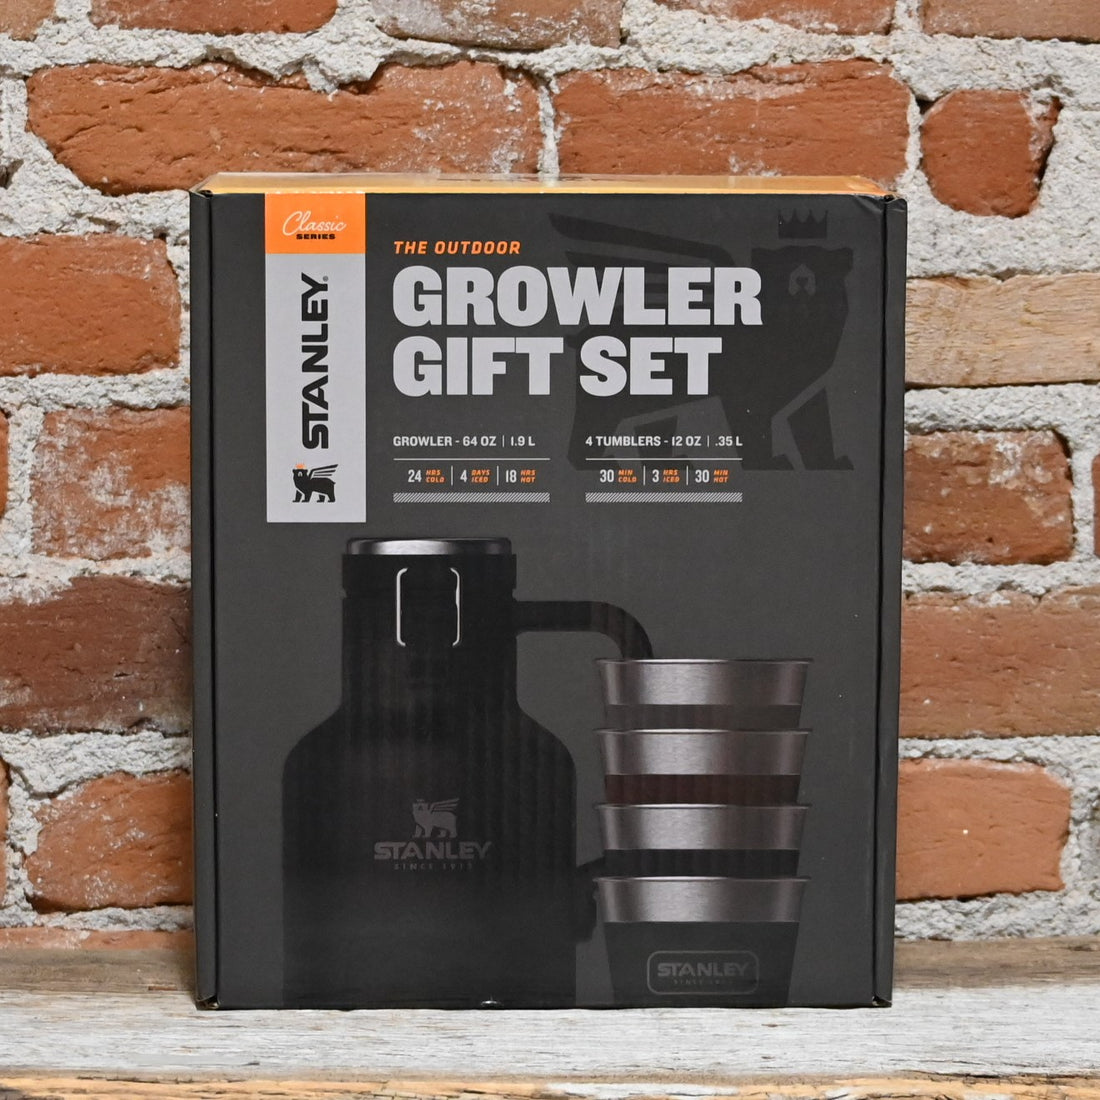 Stanley Outdoor Growler Gift Set in Matte Black view of growler gift set